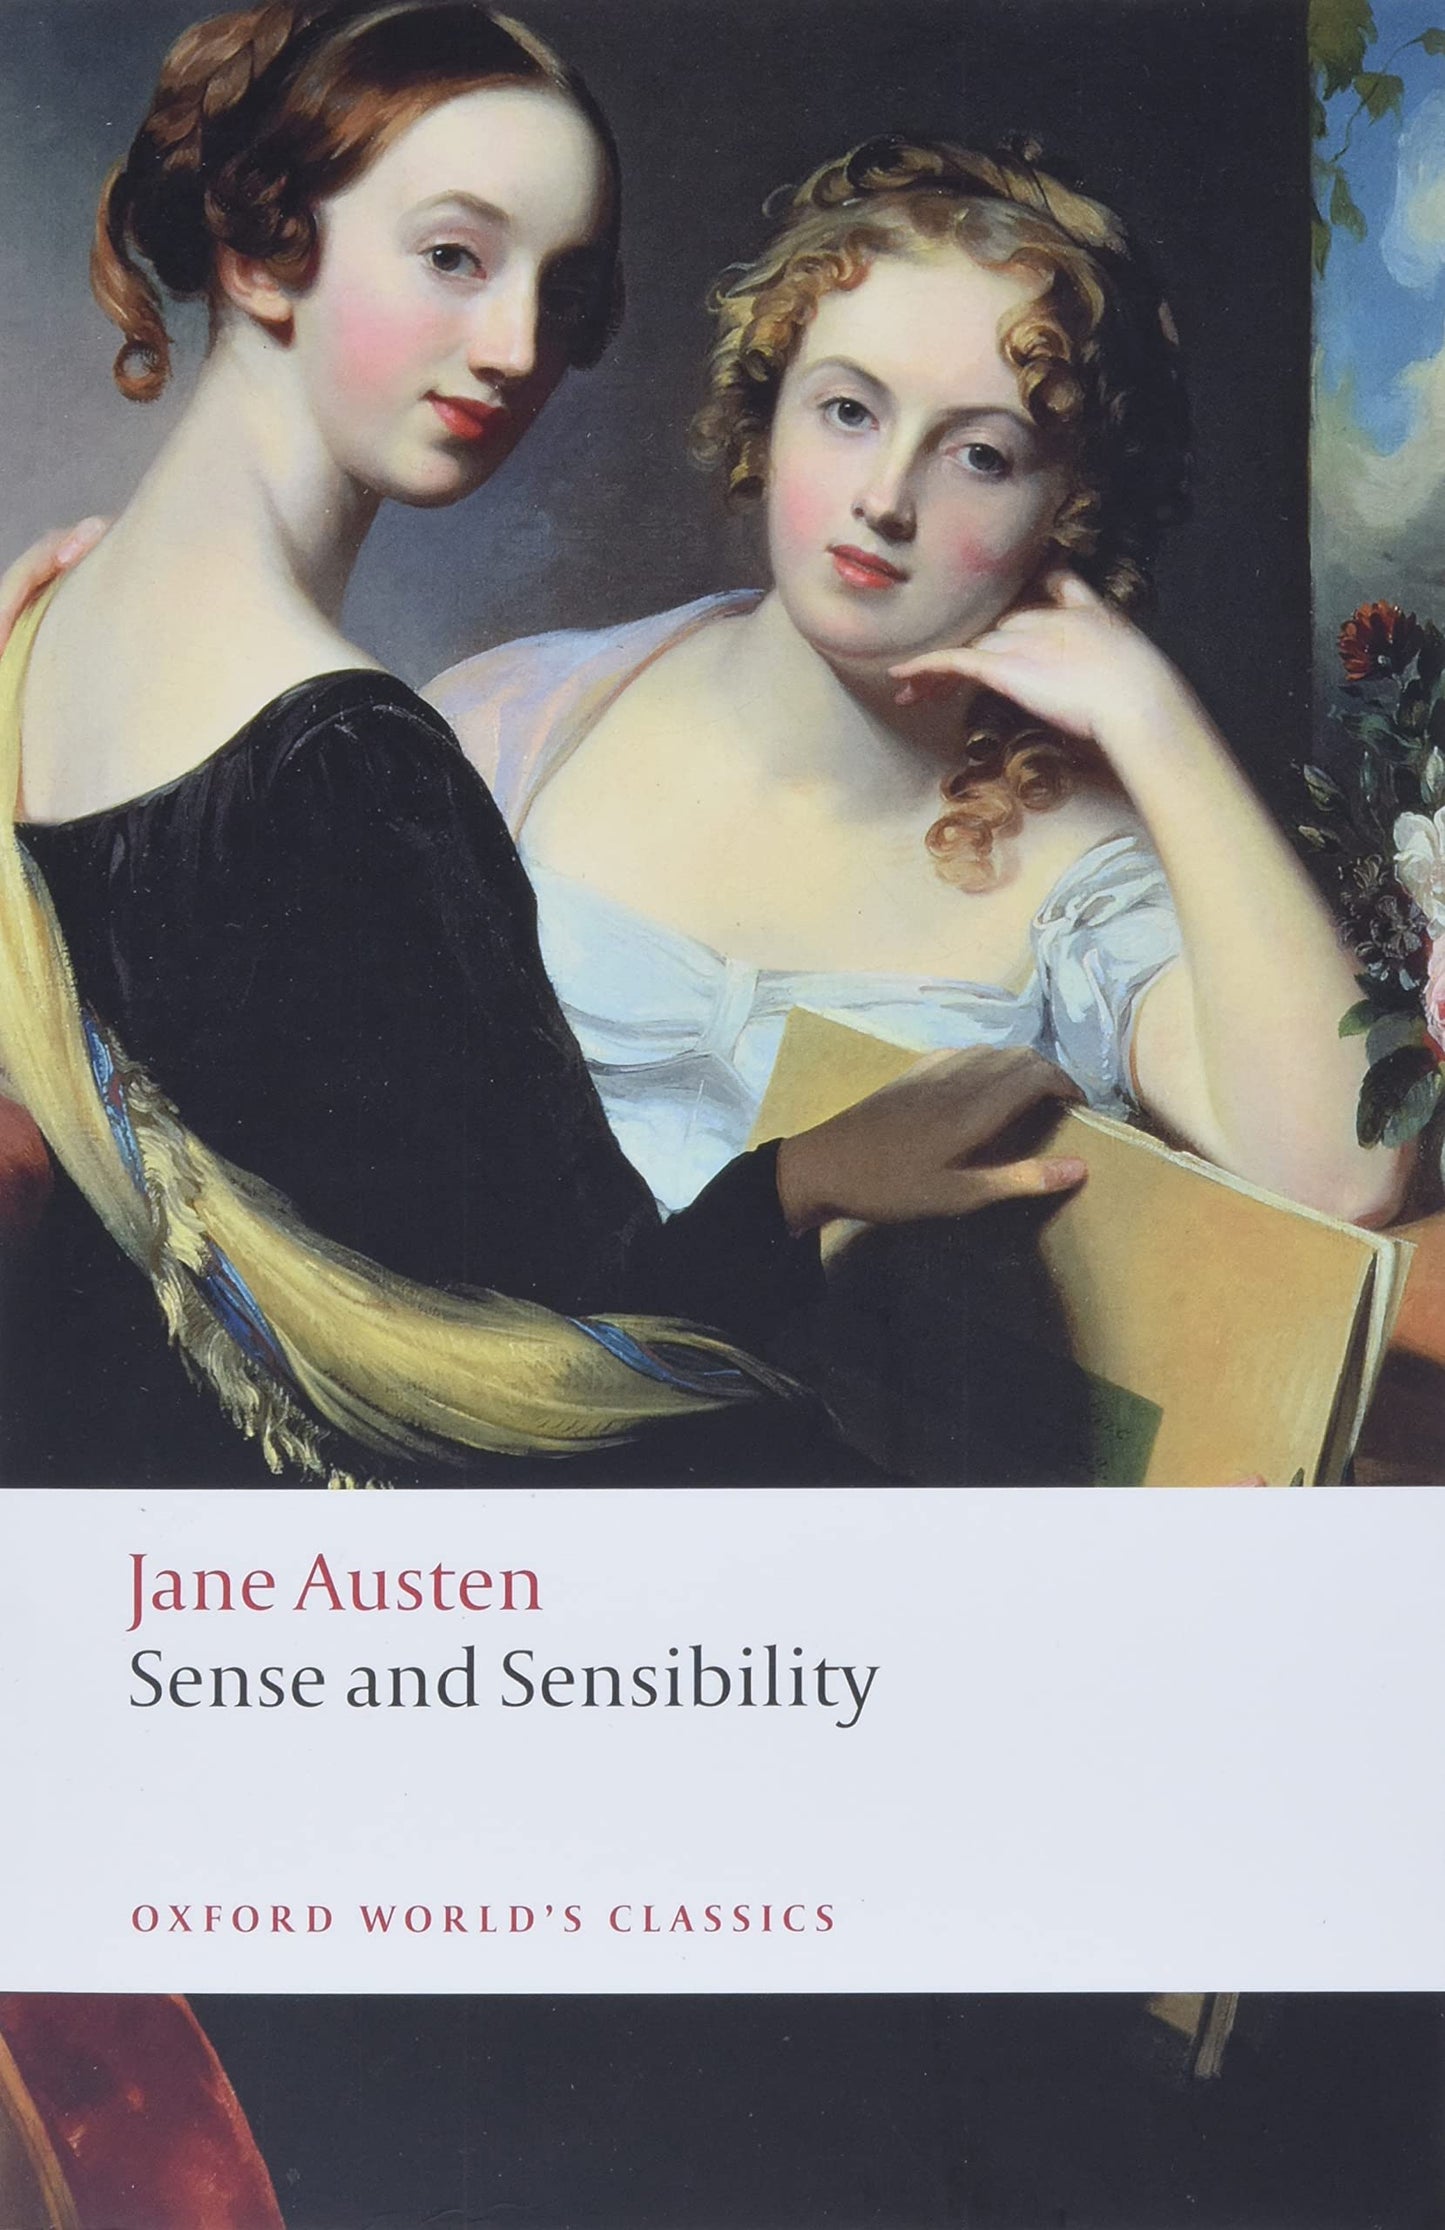 Sense and Sensibility (Austen, Oxford)